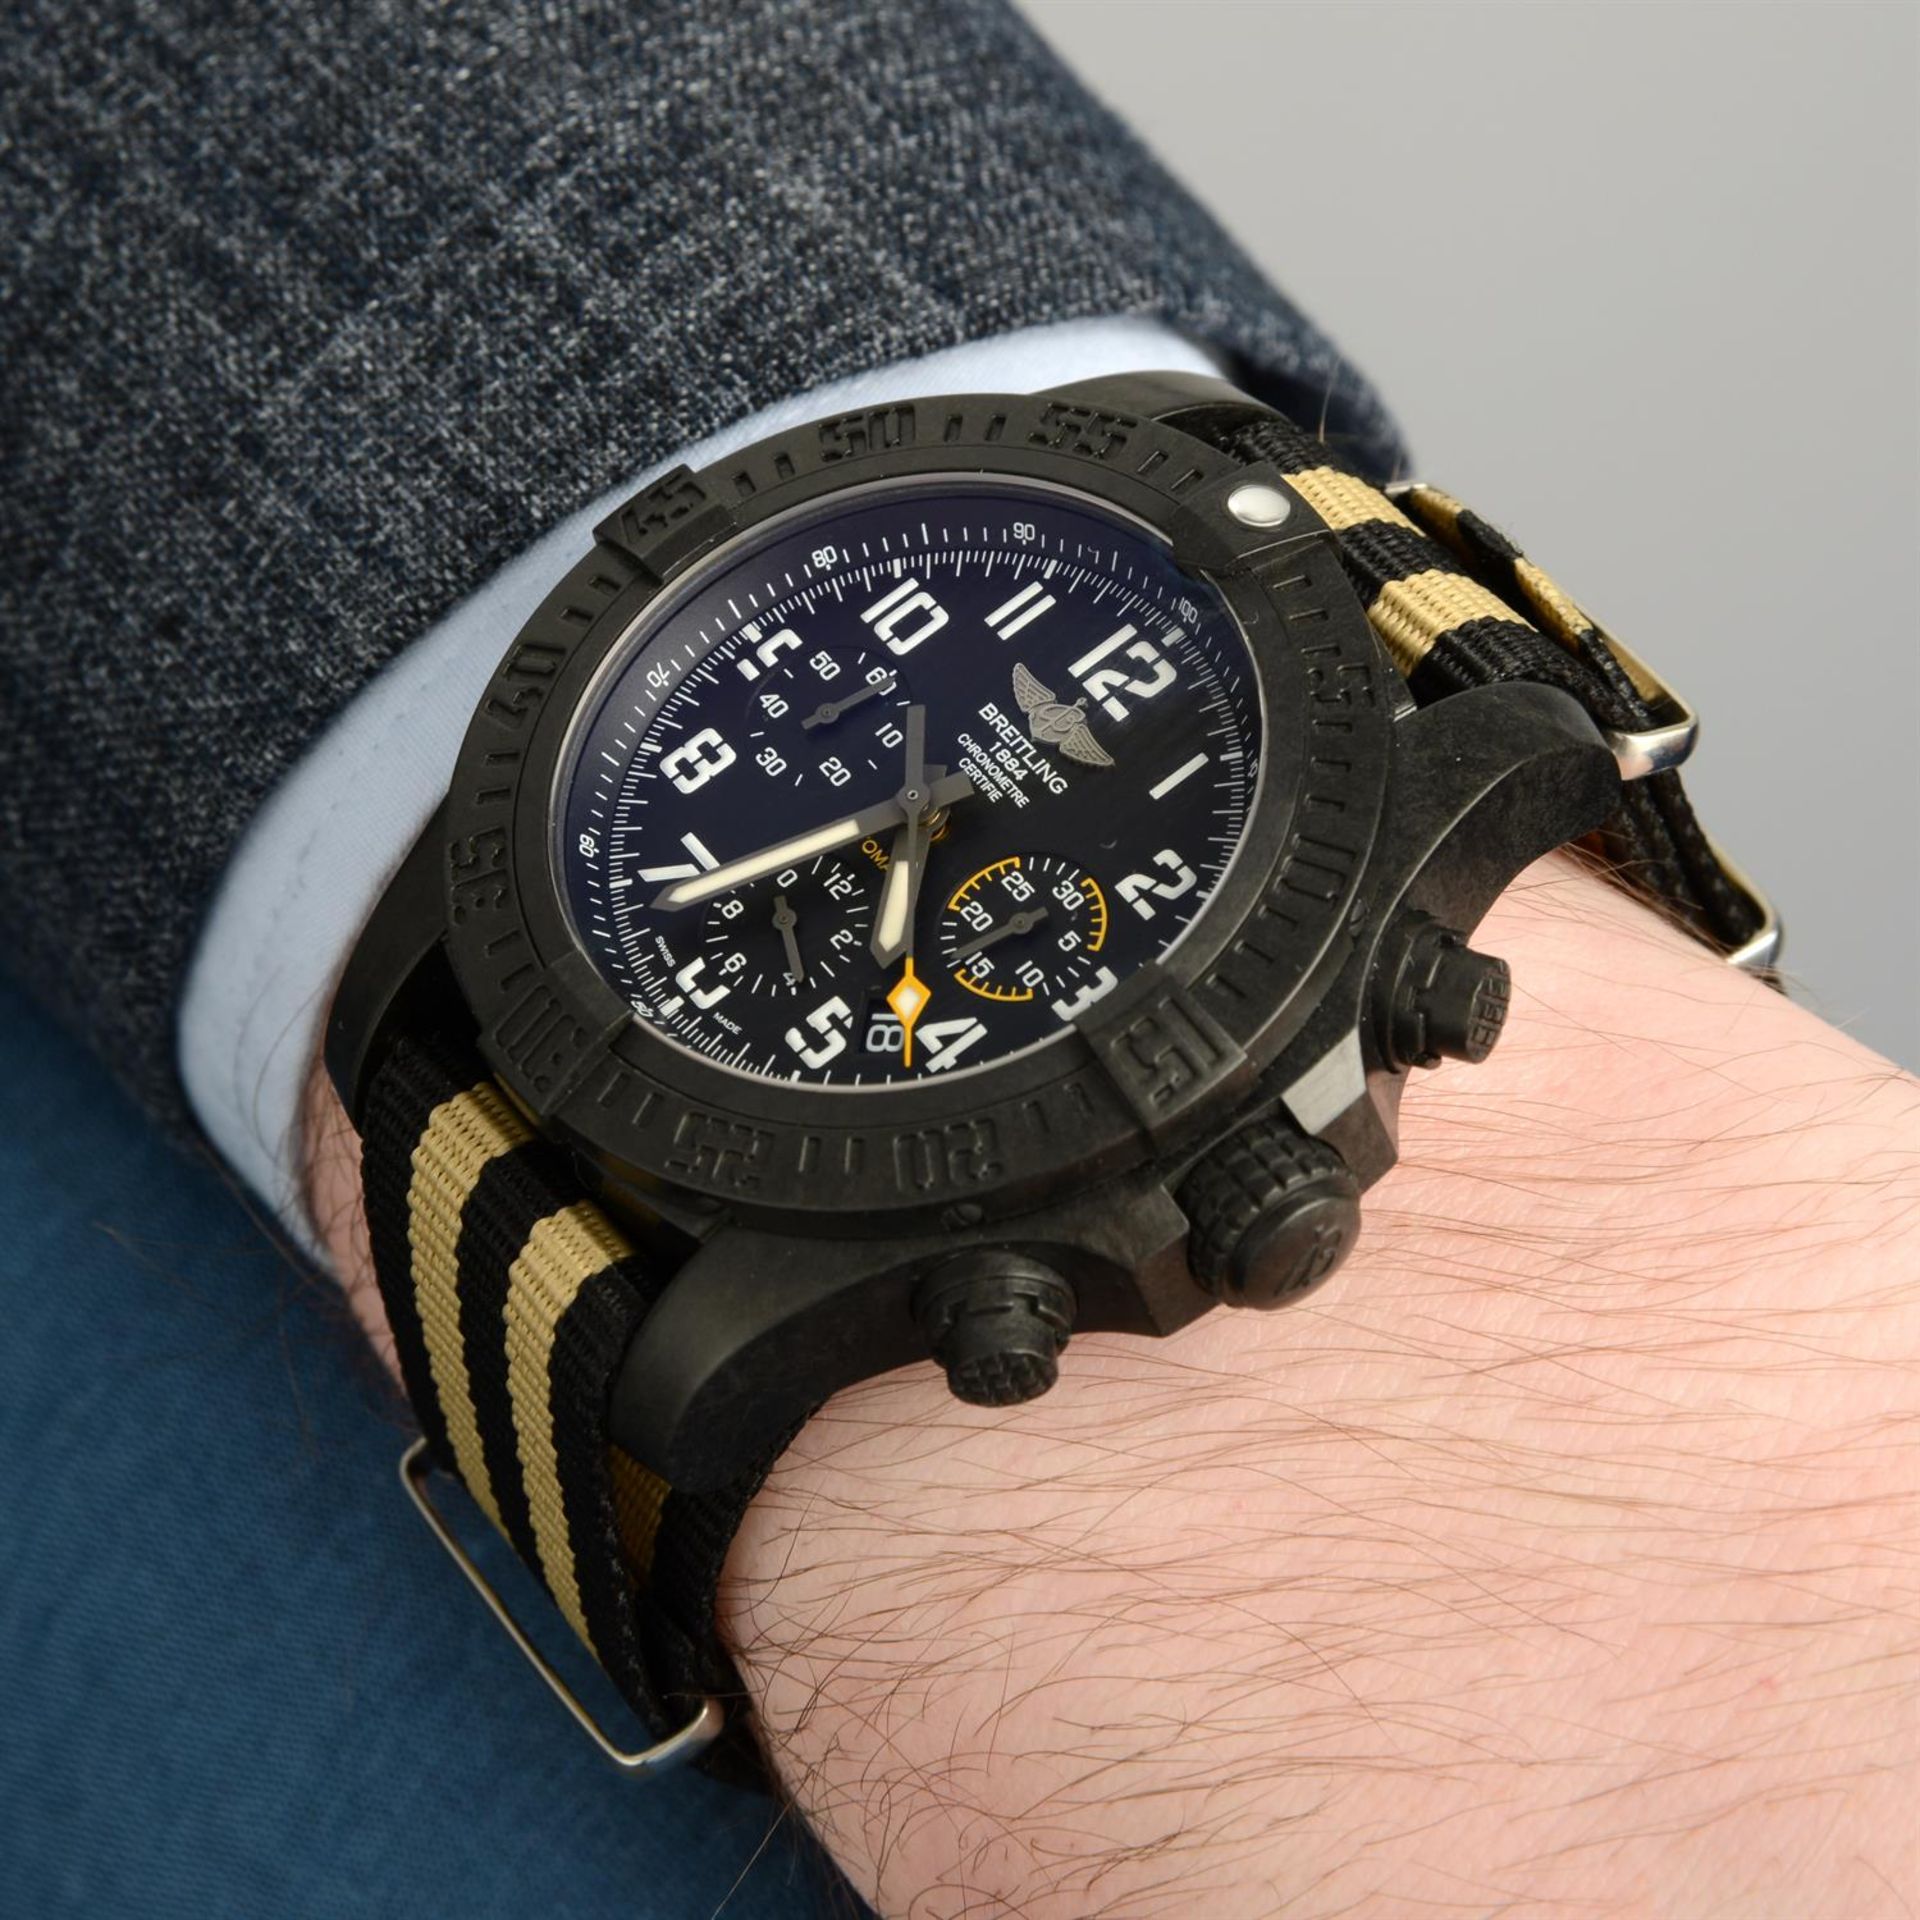 BREITLING - a Breitlight Avenger Hurricane chronograph wrist watch, 45mm. - Image 5 of 5